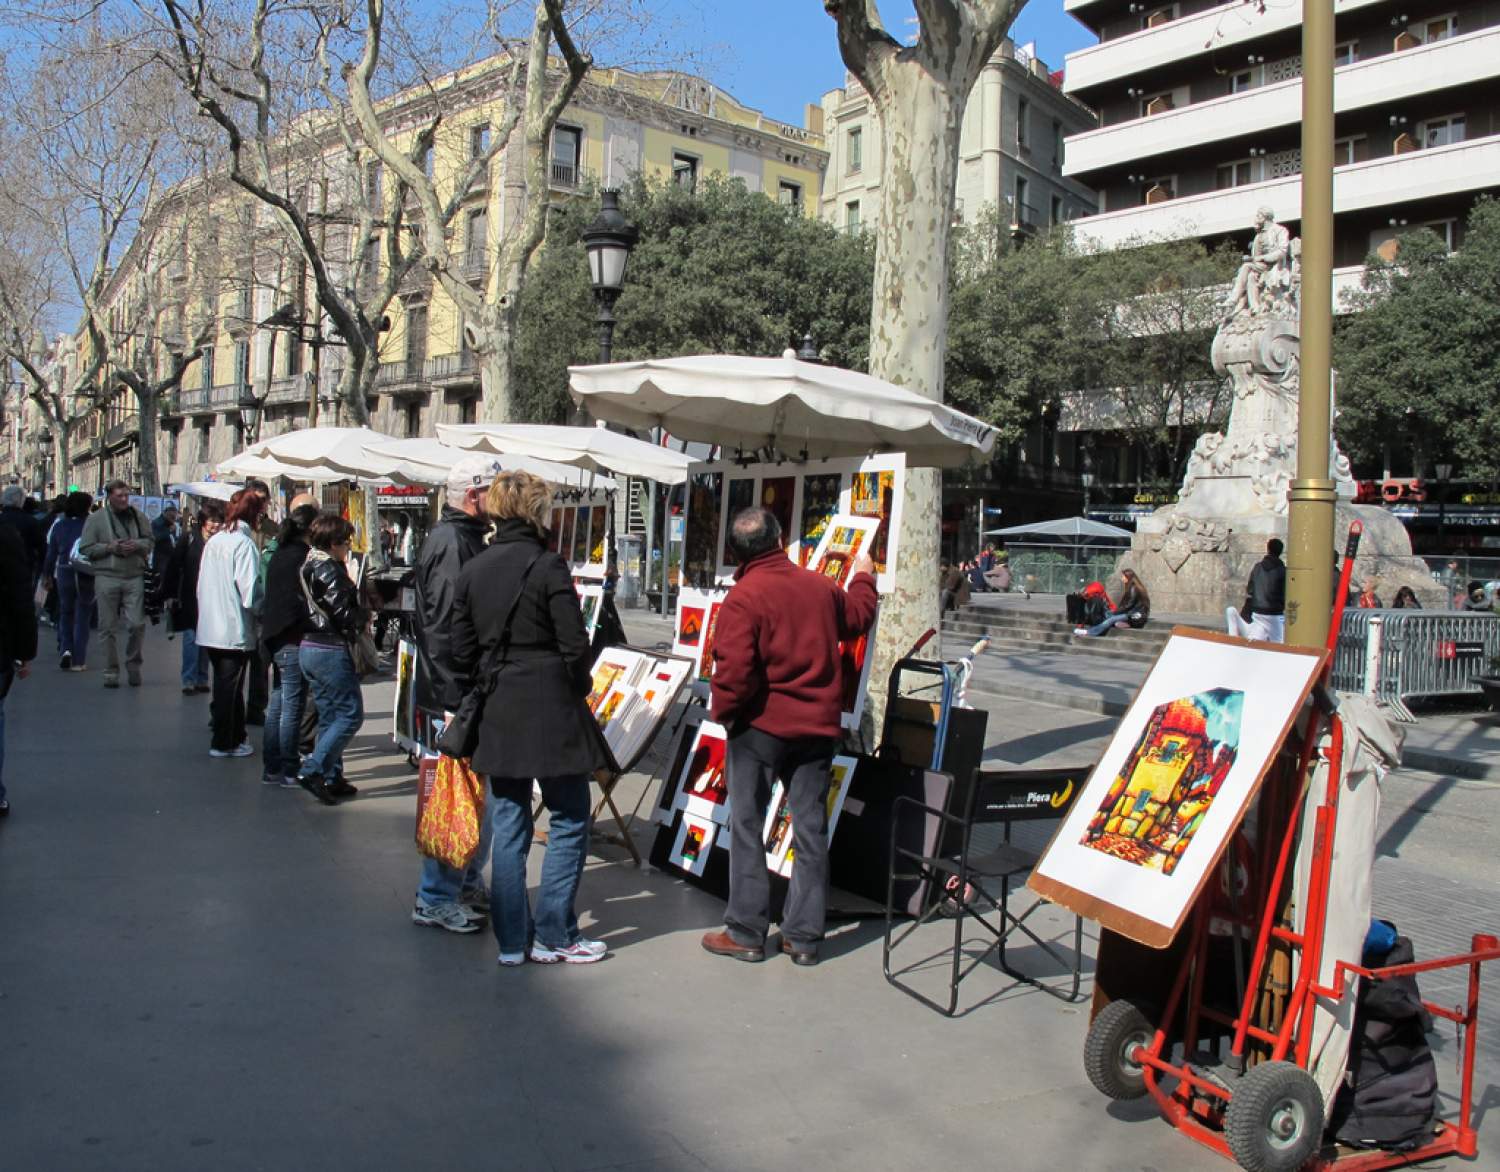 La Rambla boulevard in Barcelona